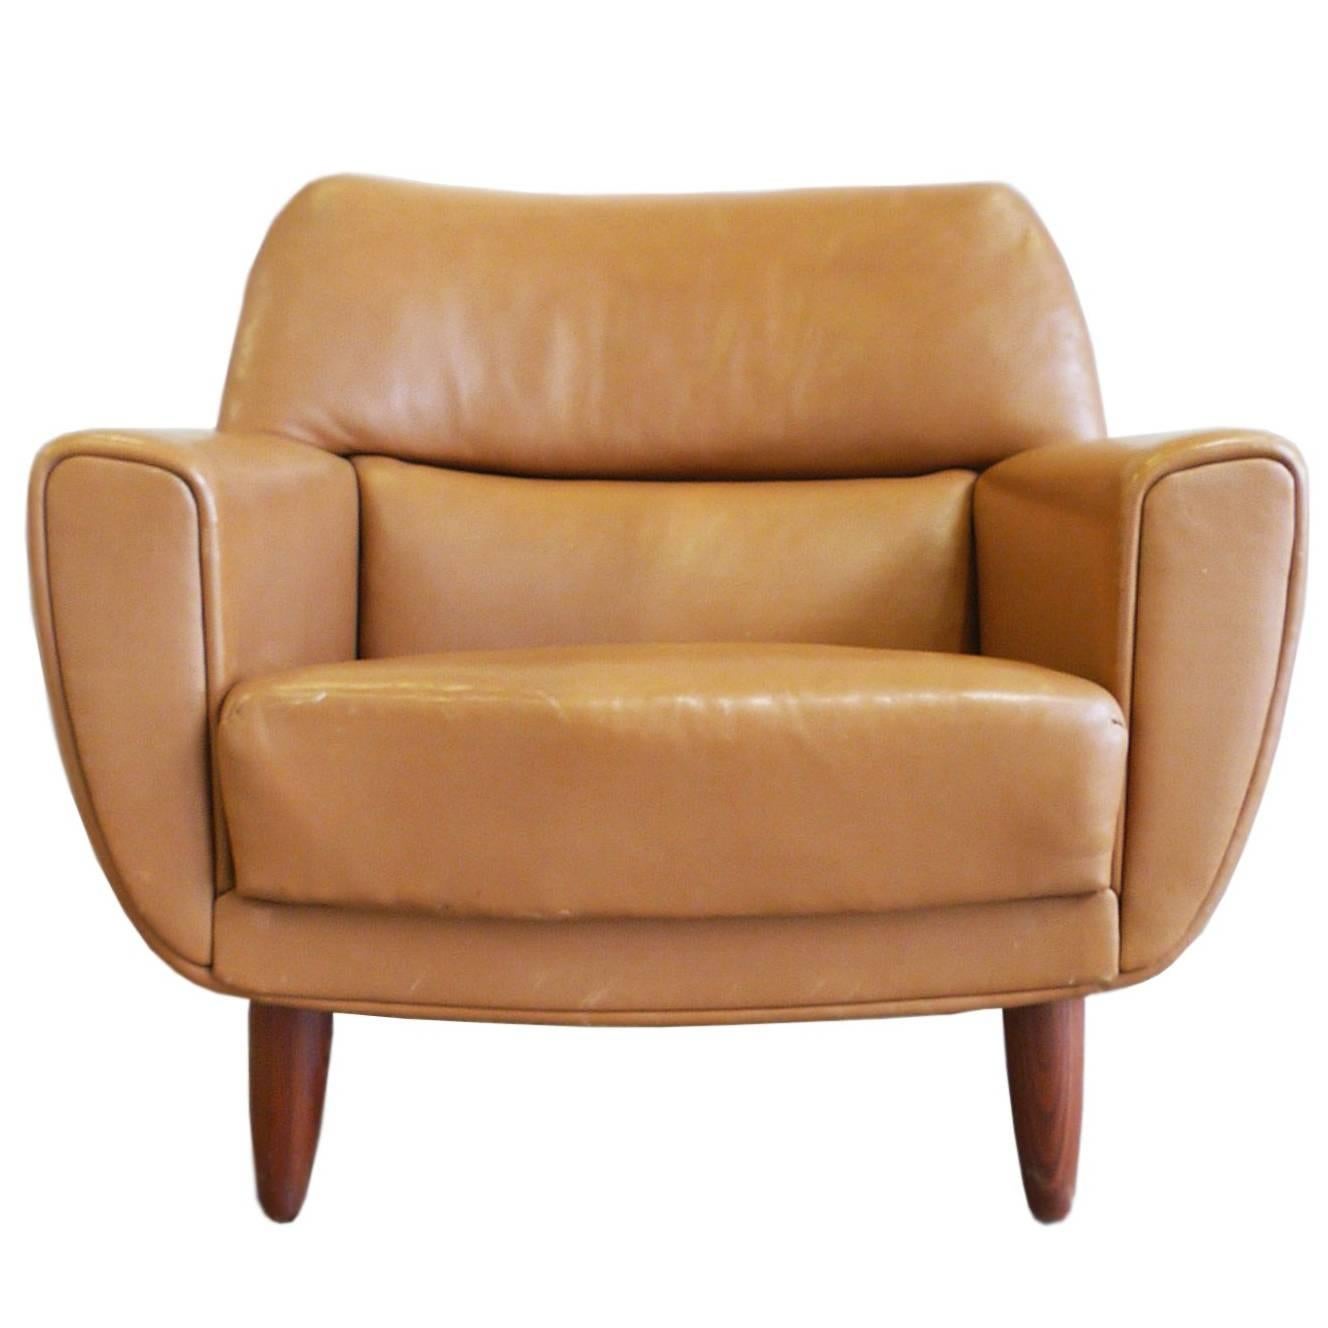 Danish Midcentury Tan Leather Lounge Chair by Illum Wikkelsø